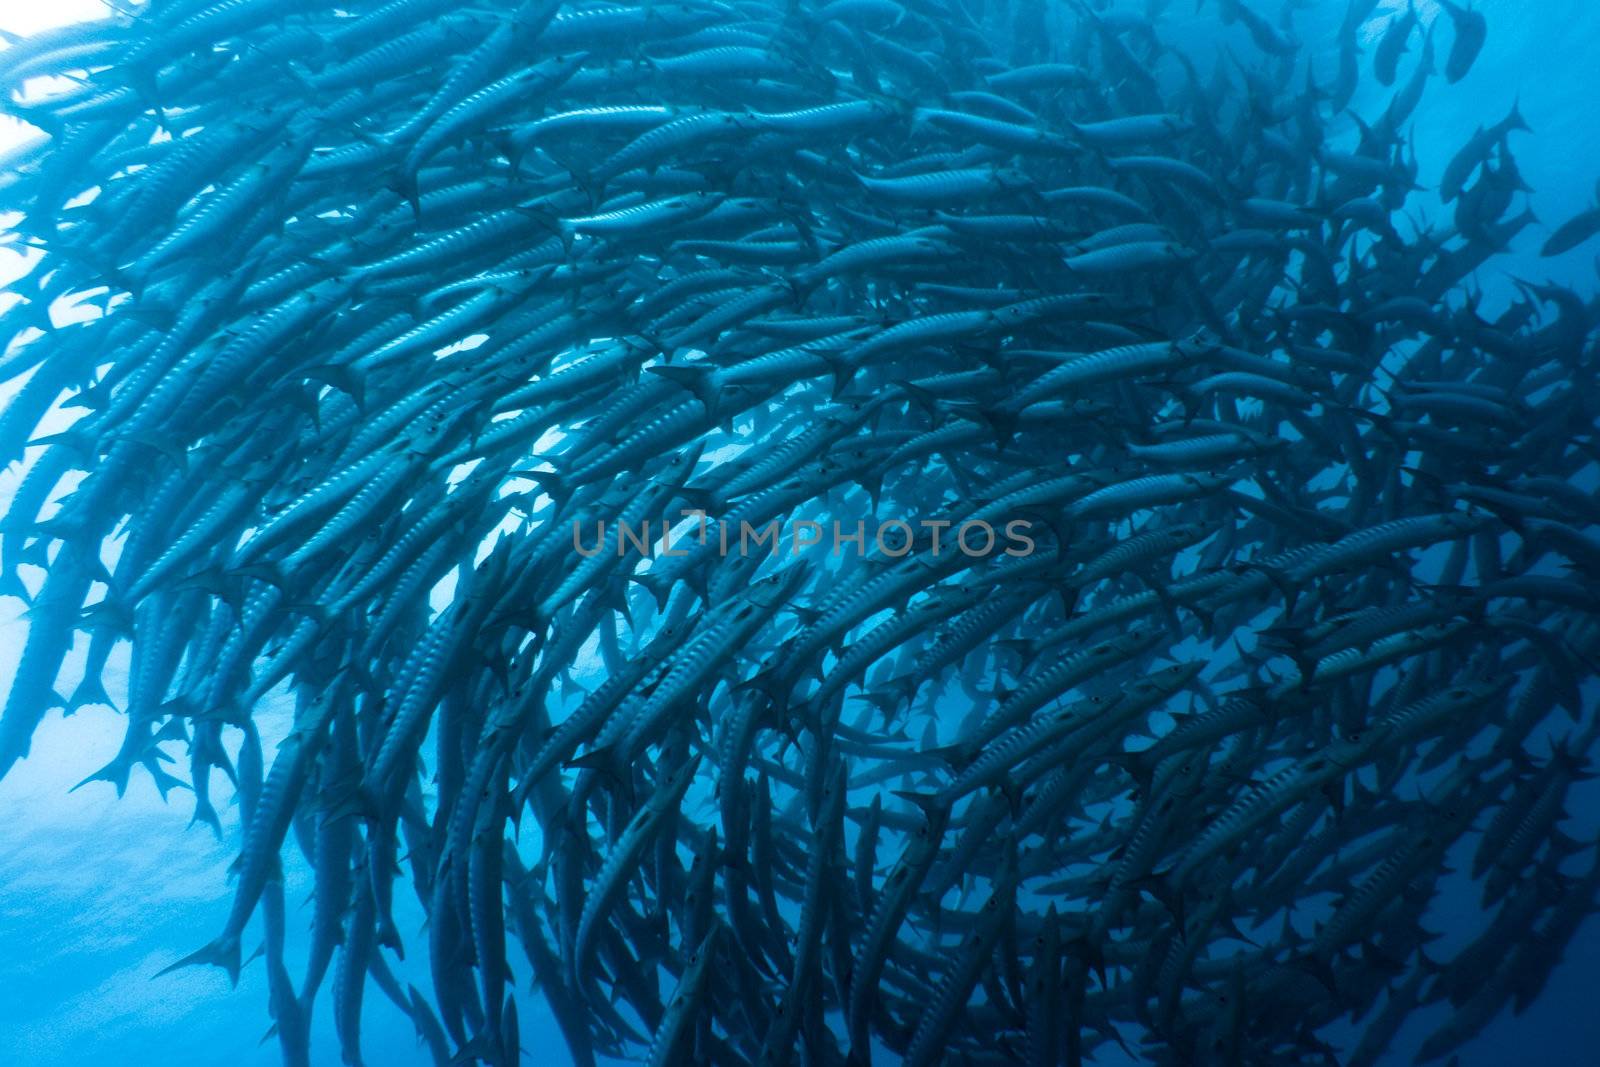 School of barracudas underwater. Sipadan. Celebes sea